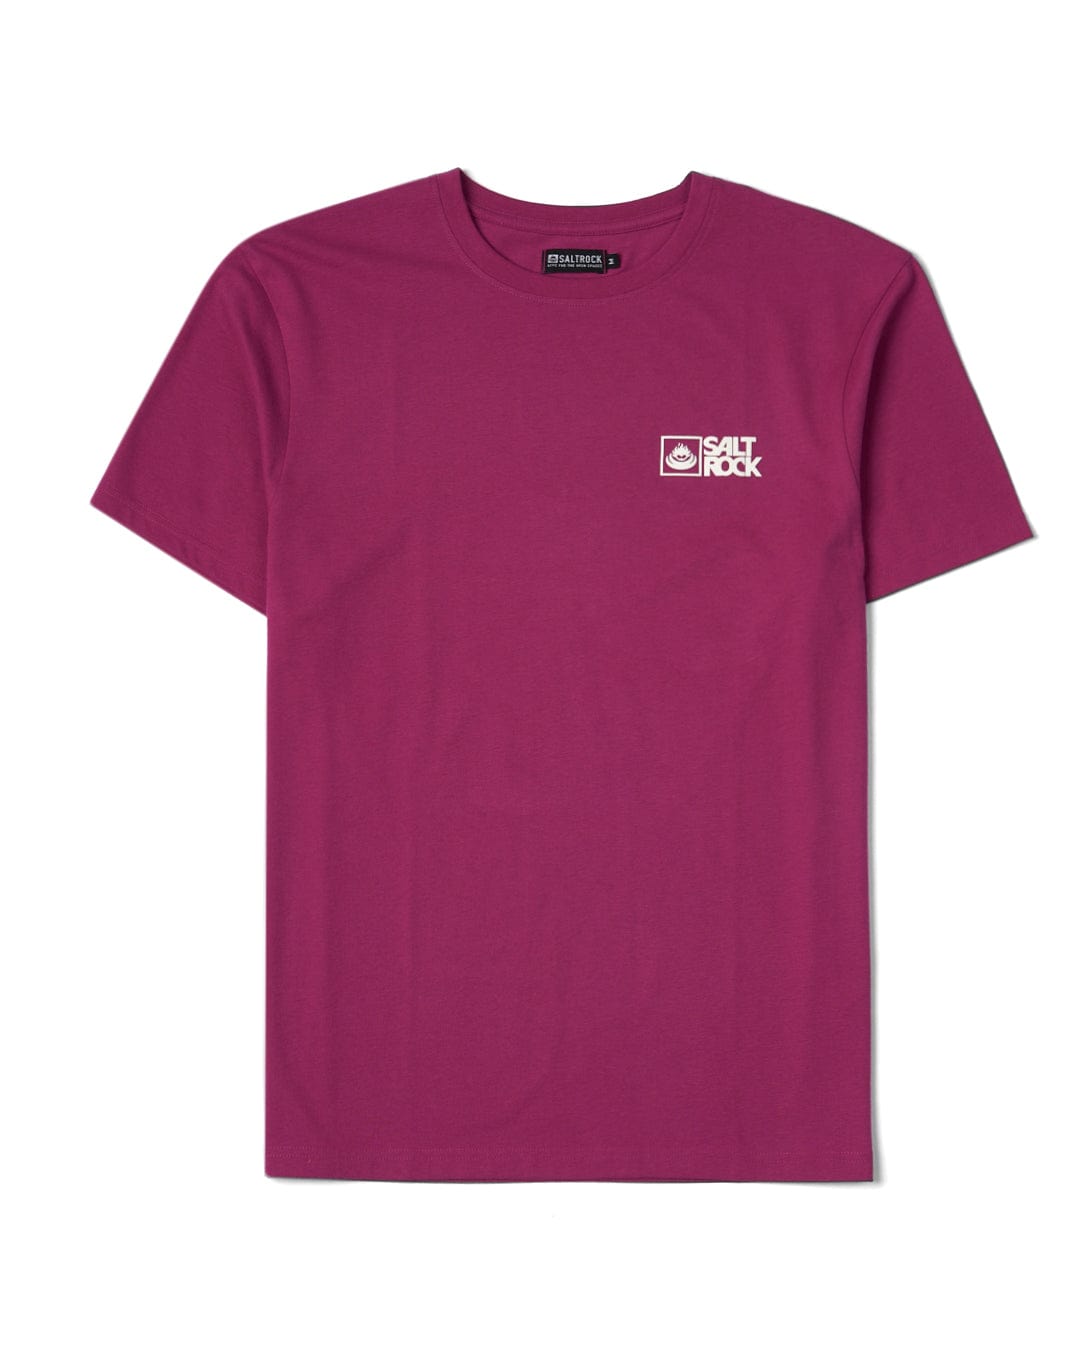 Saltrock Original - Mens Short Sleeve T-Shirt - Burgundy, Pink / M